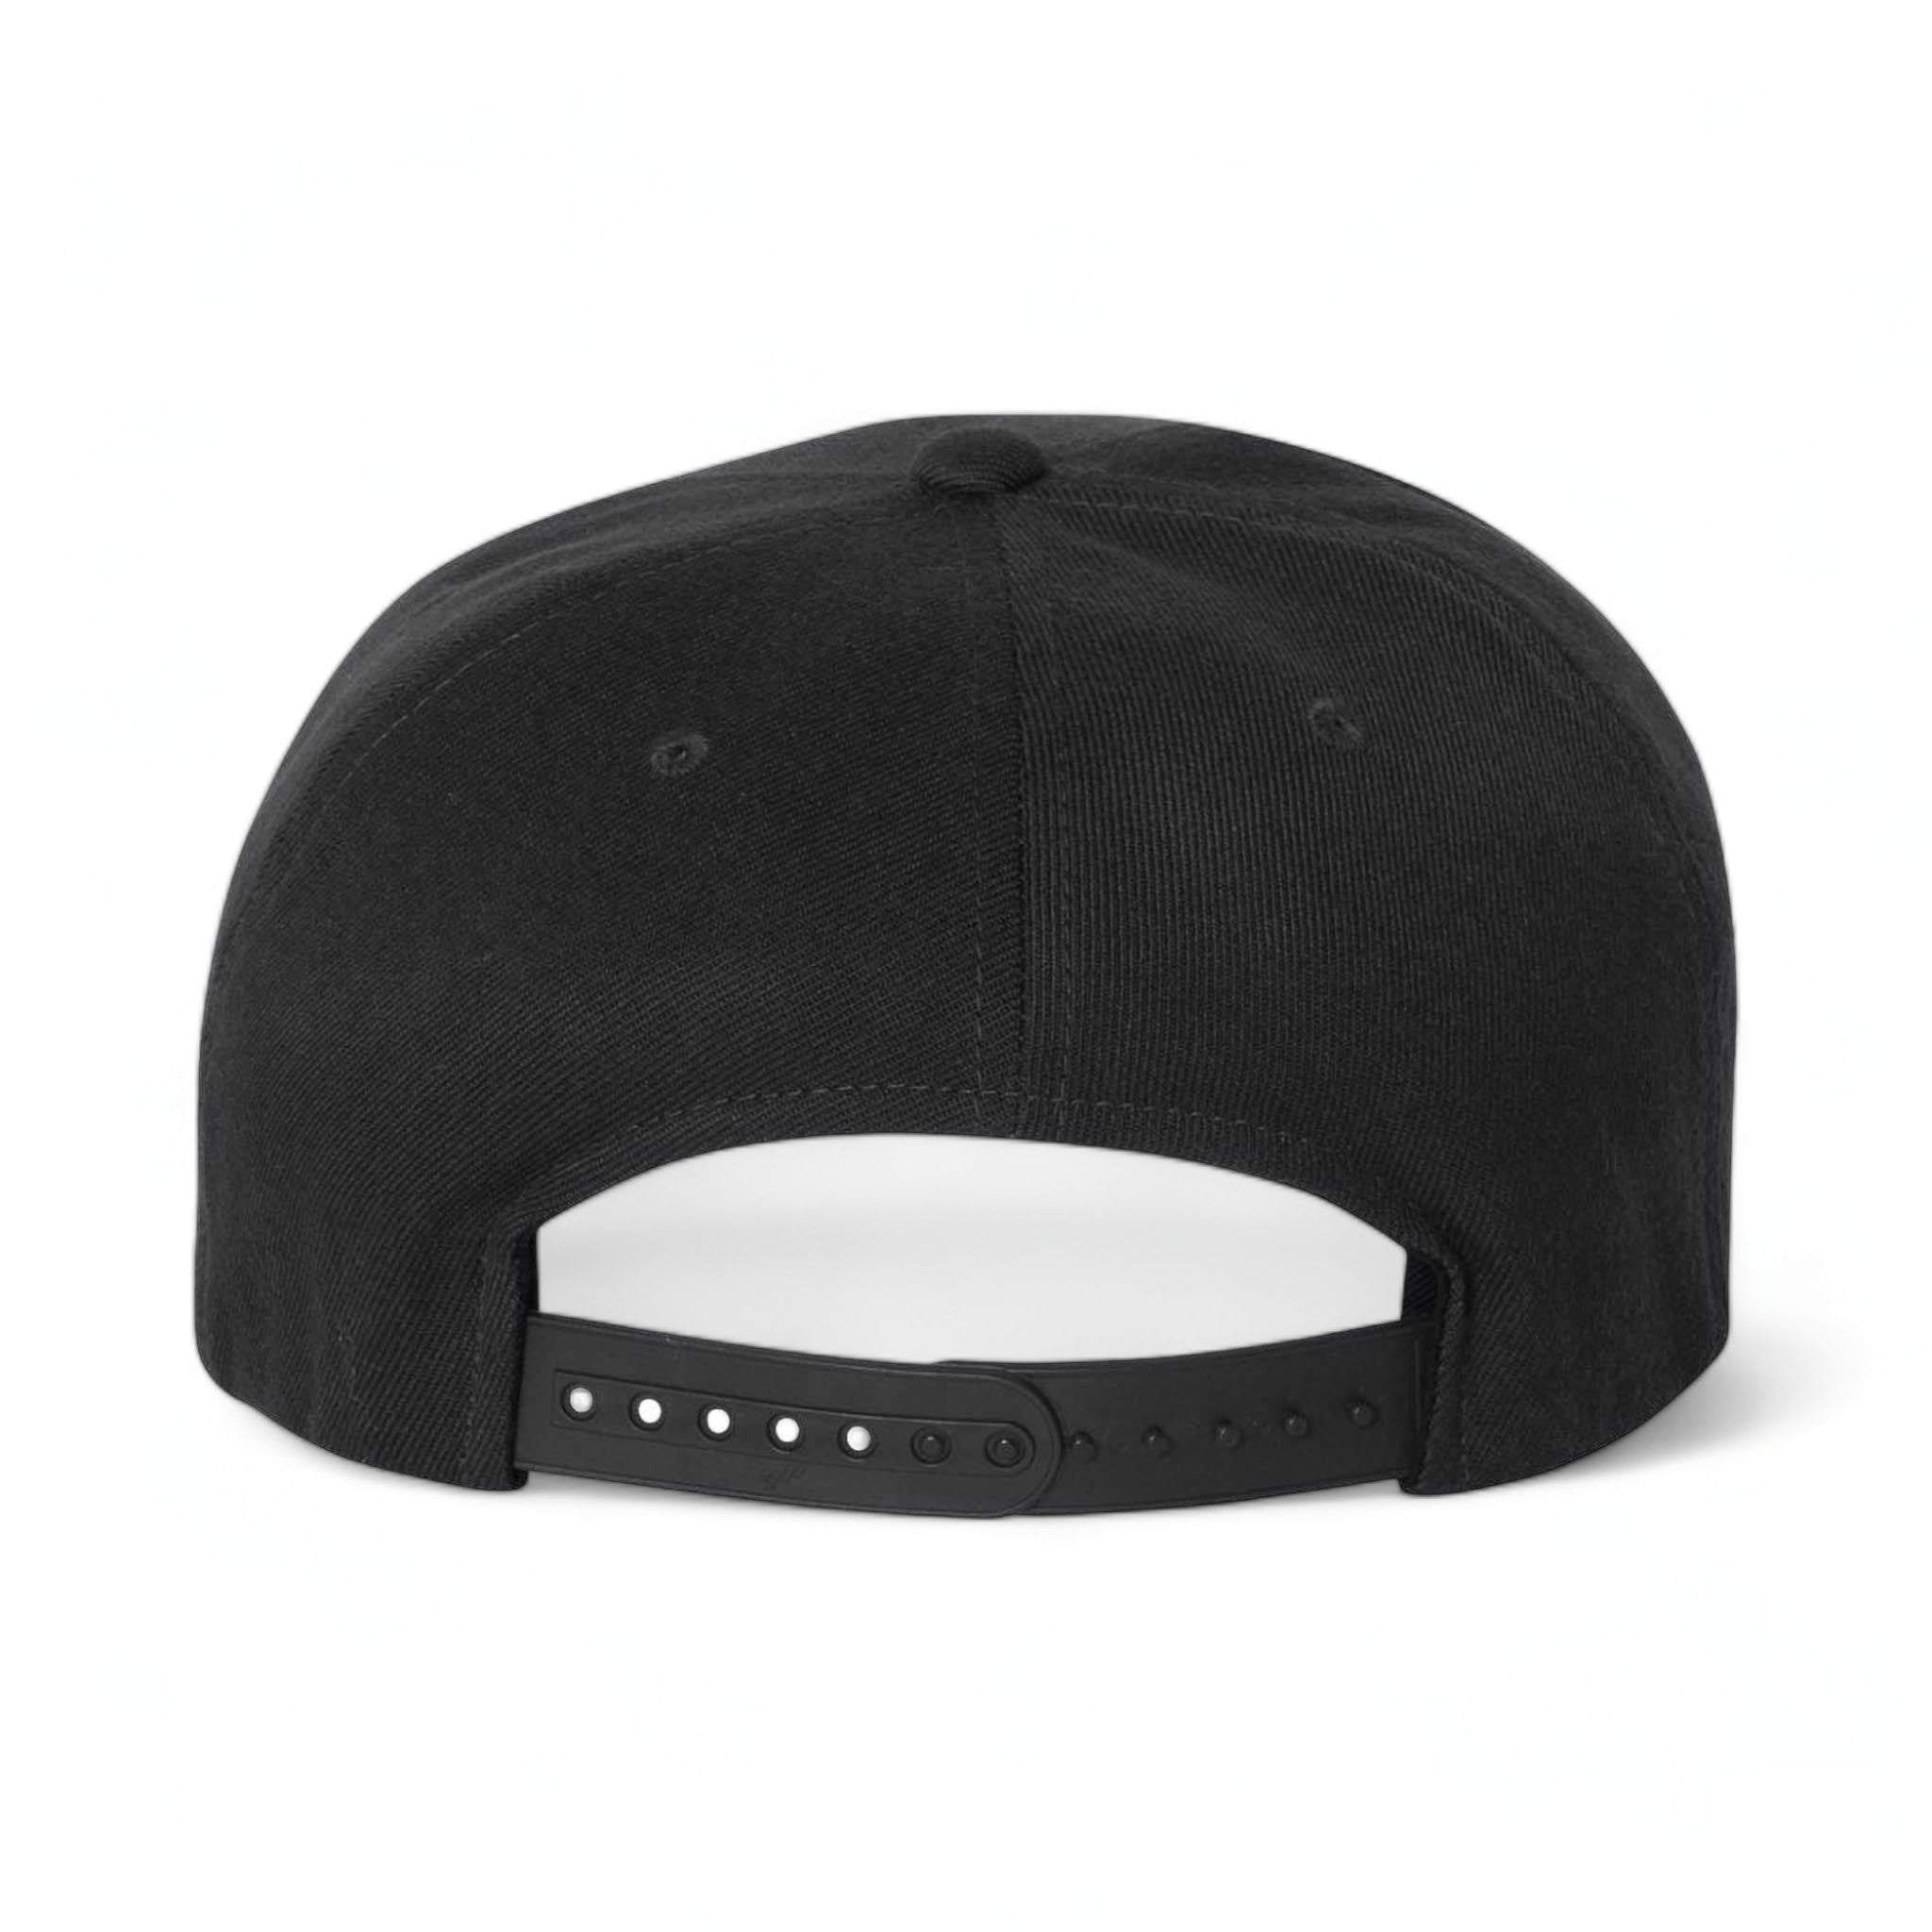 Back view of Flexfit 110F custom hat in black